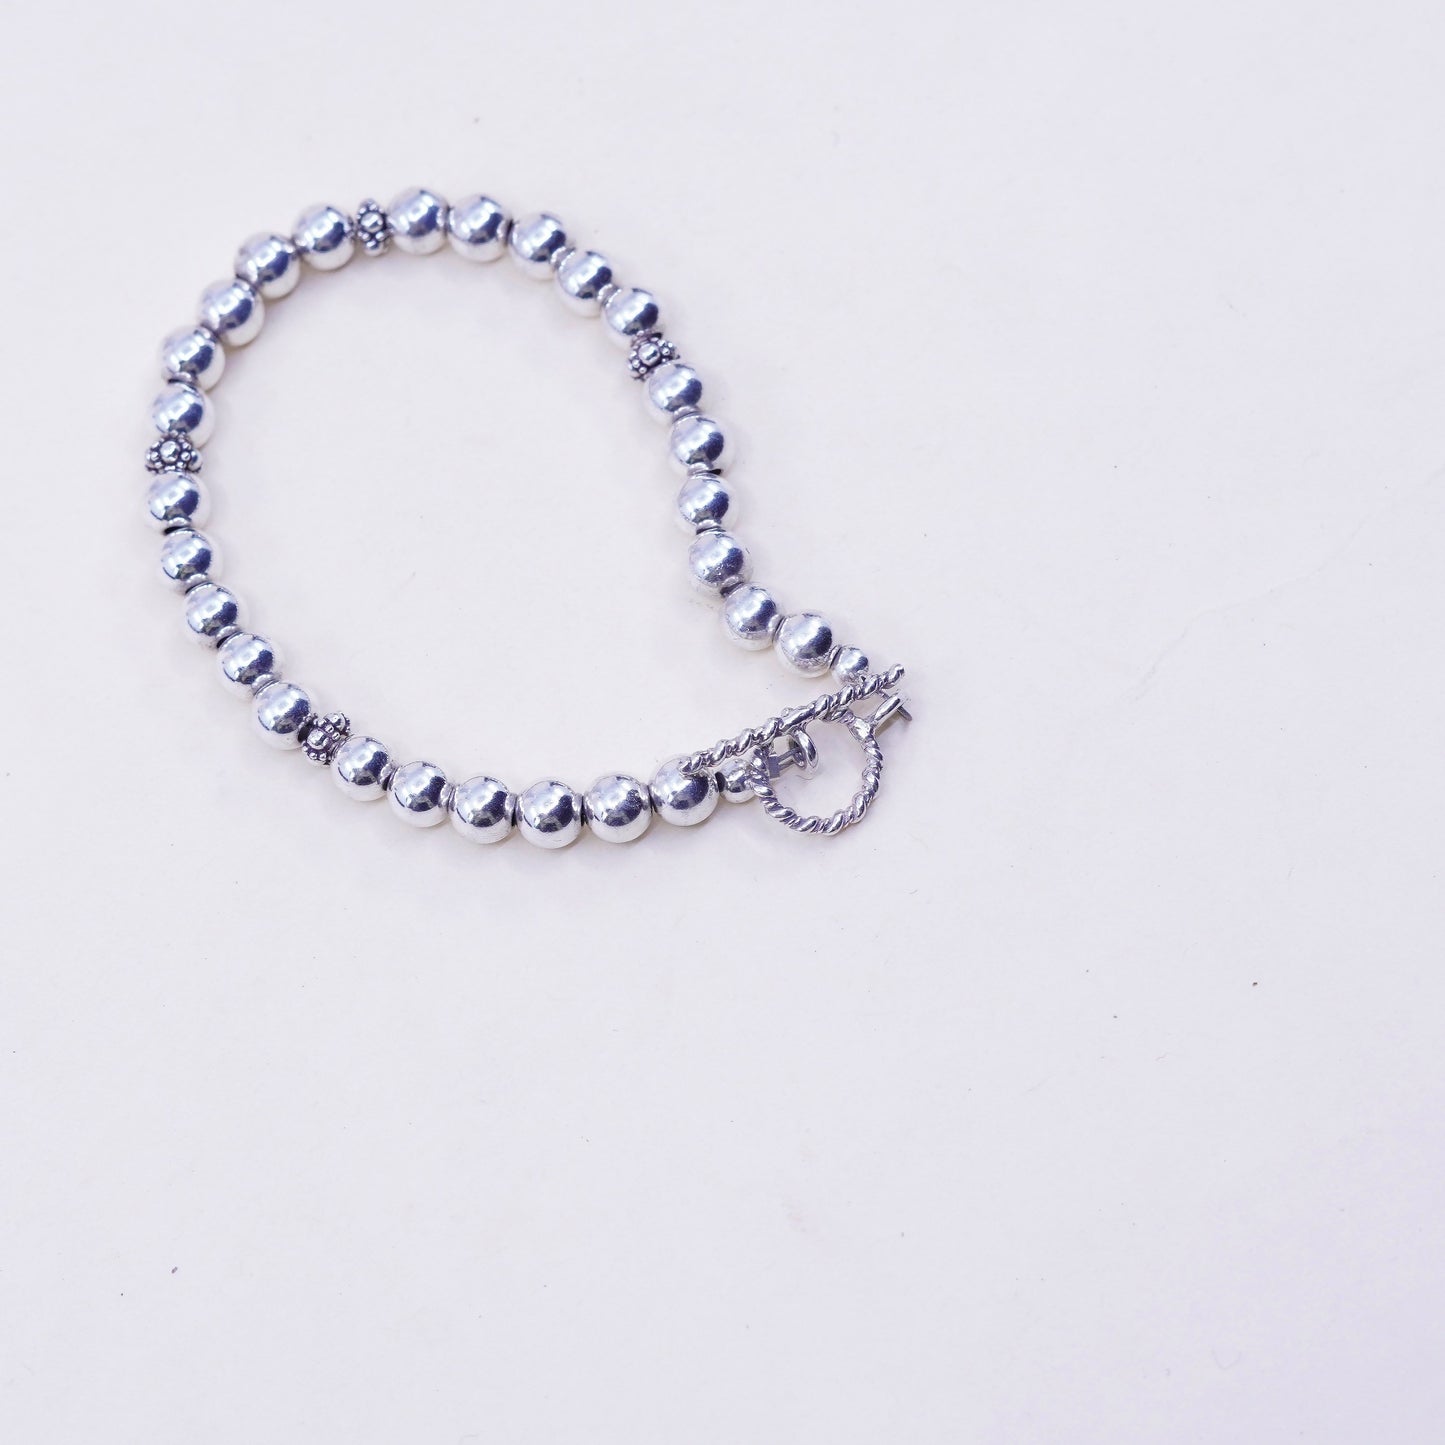 7”, 5mm, Vintage sterling silver bracelet, filigree 925 beads chain, jewelry